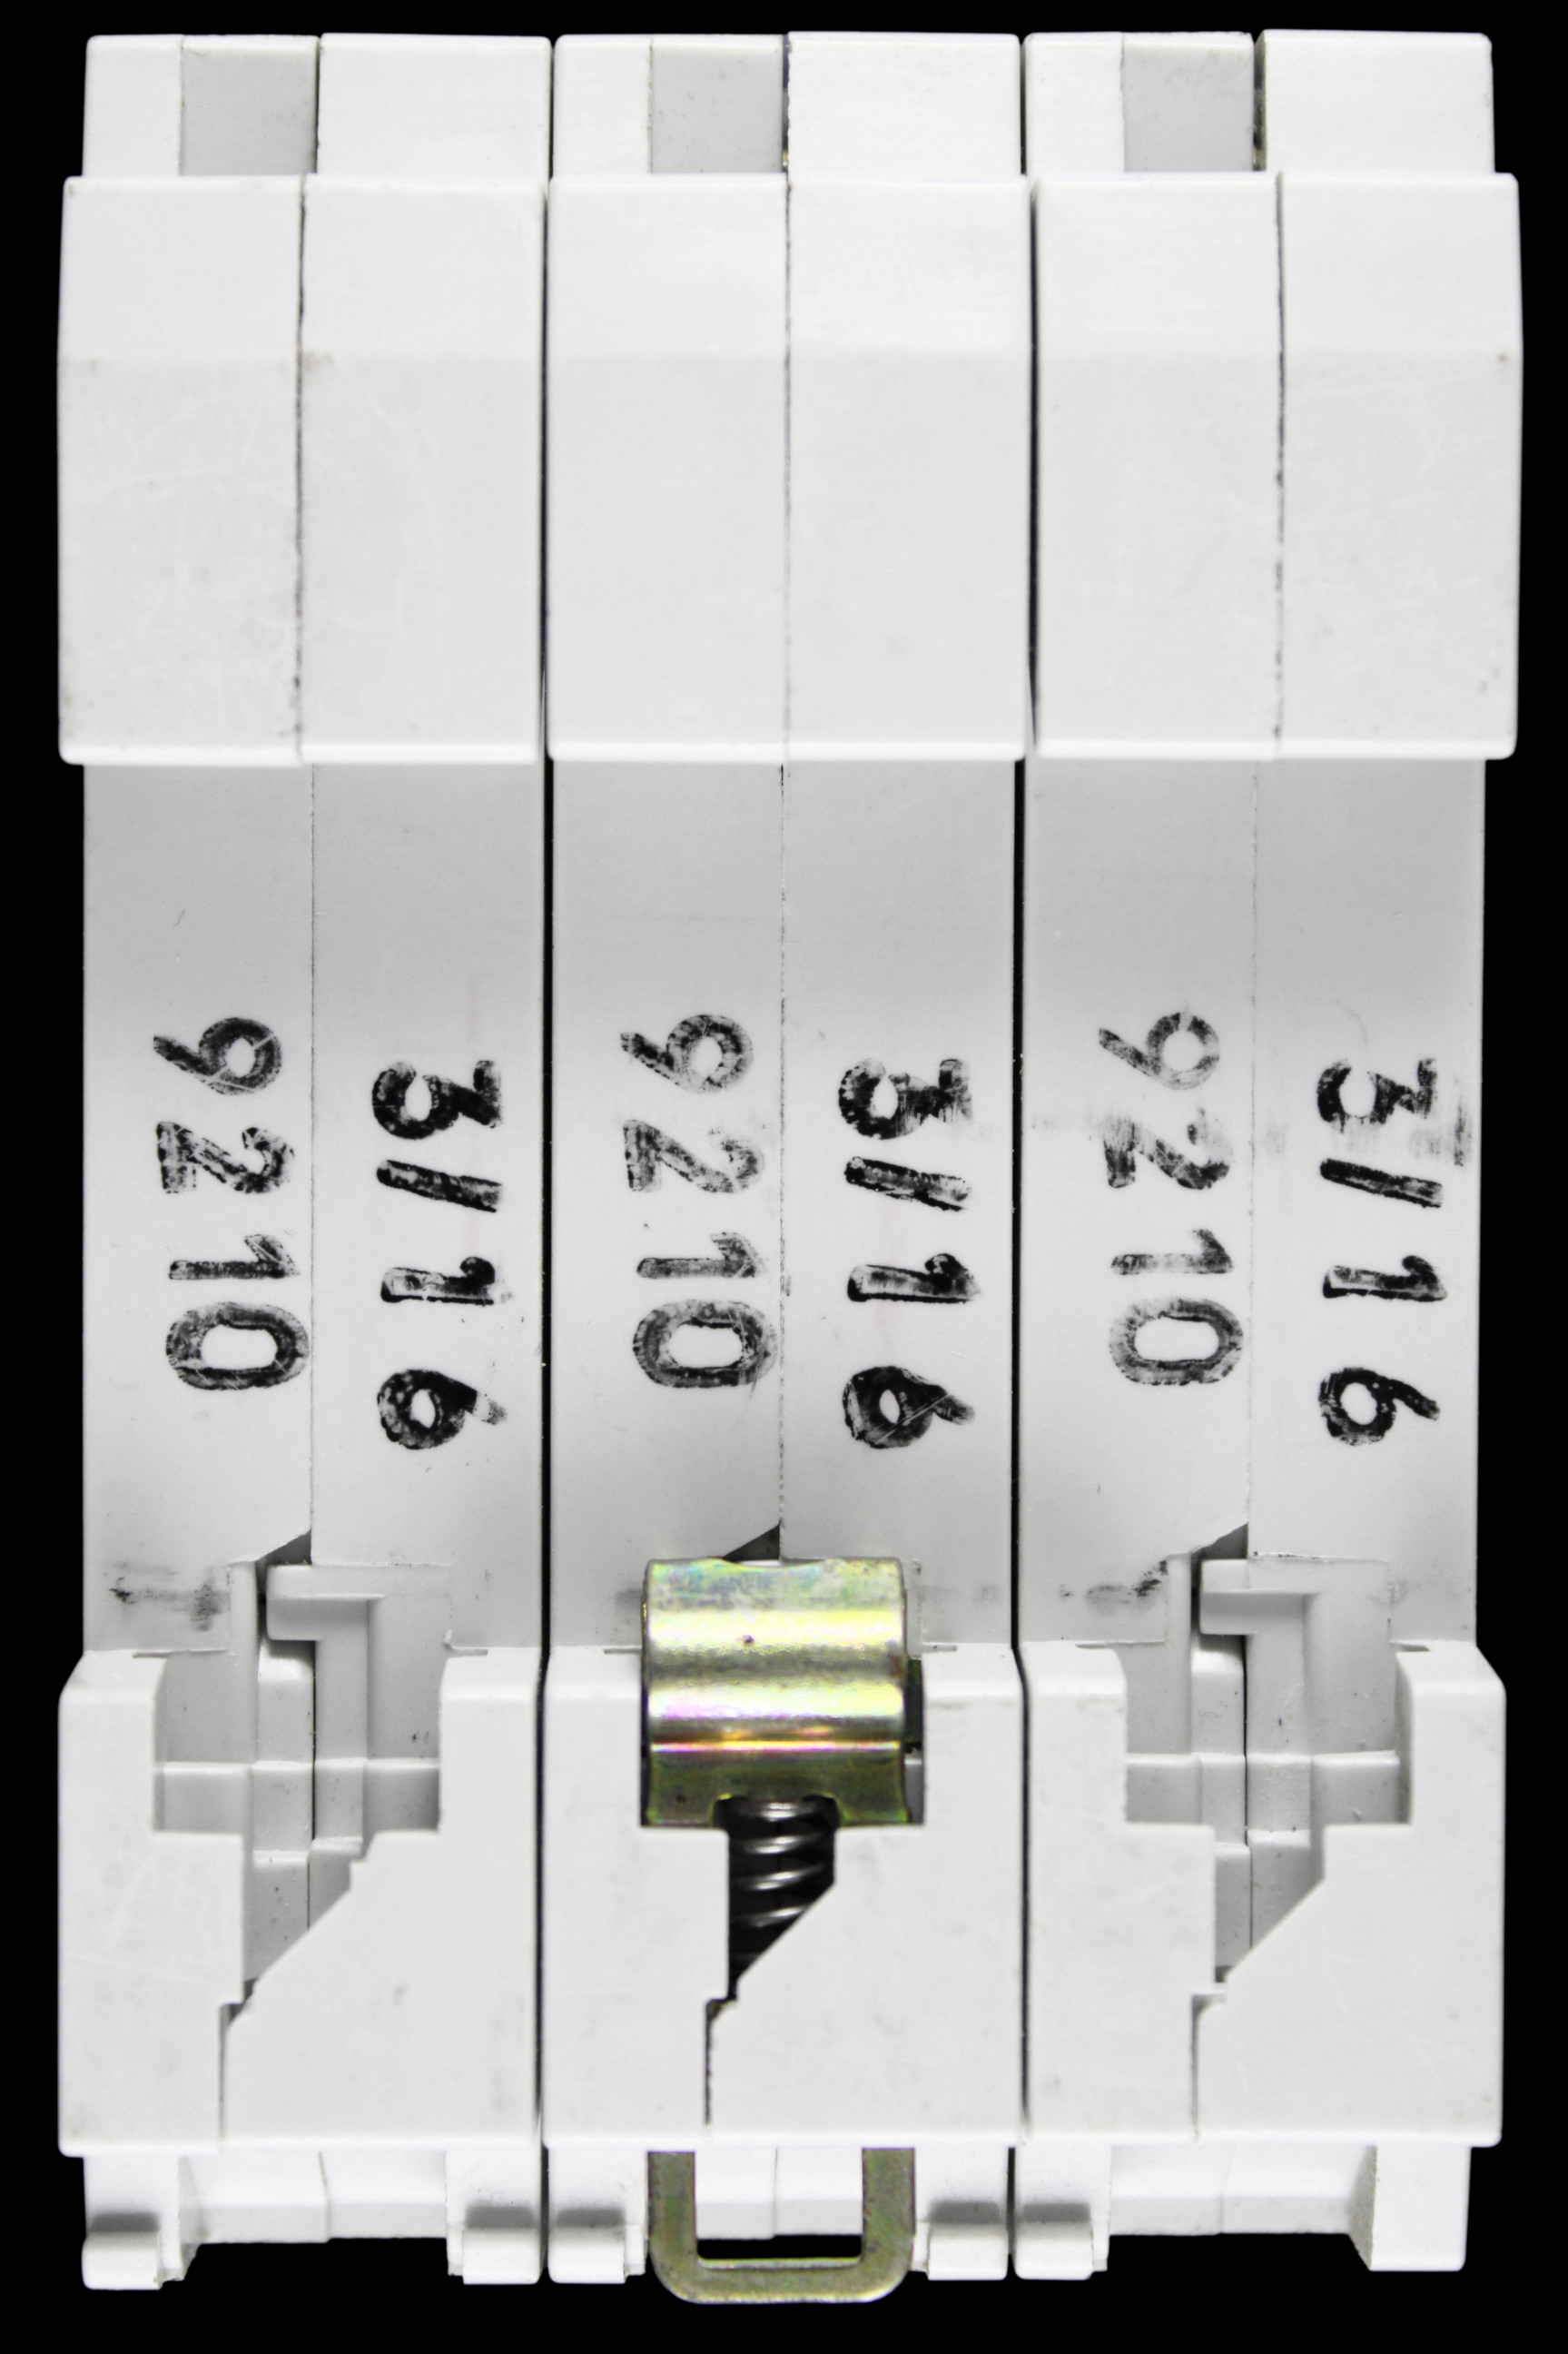 DORMAN SMITH 16 AMP TYPE 3 M9 TRIPLE POLE MCB CIRCUIT BREAKER AT163